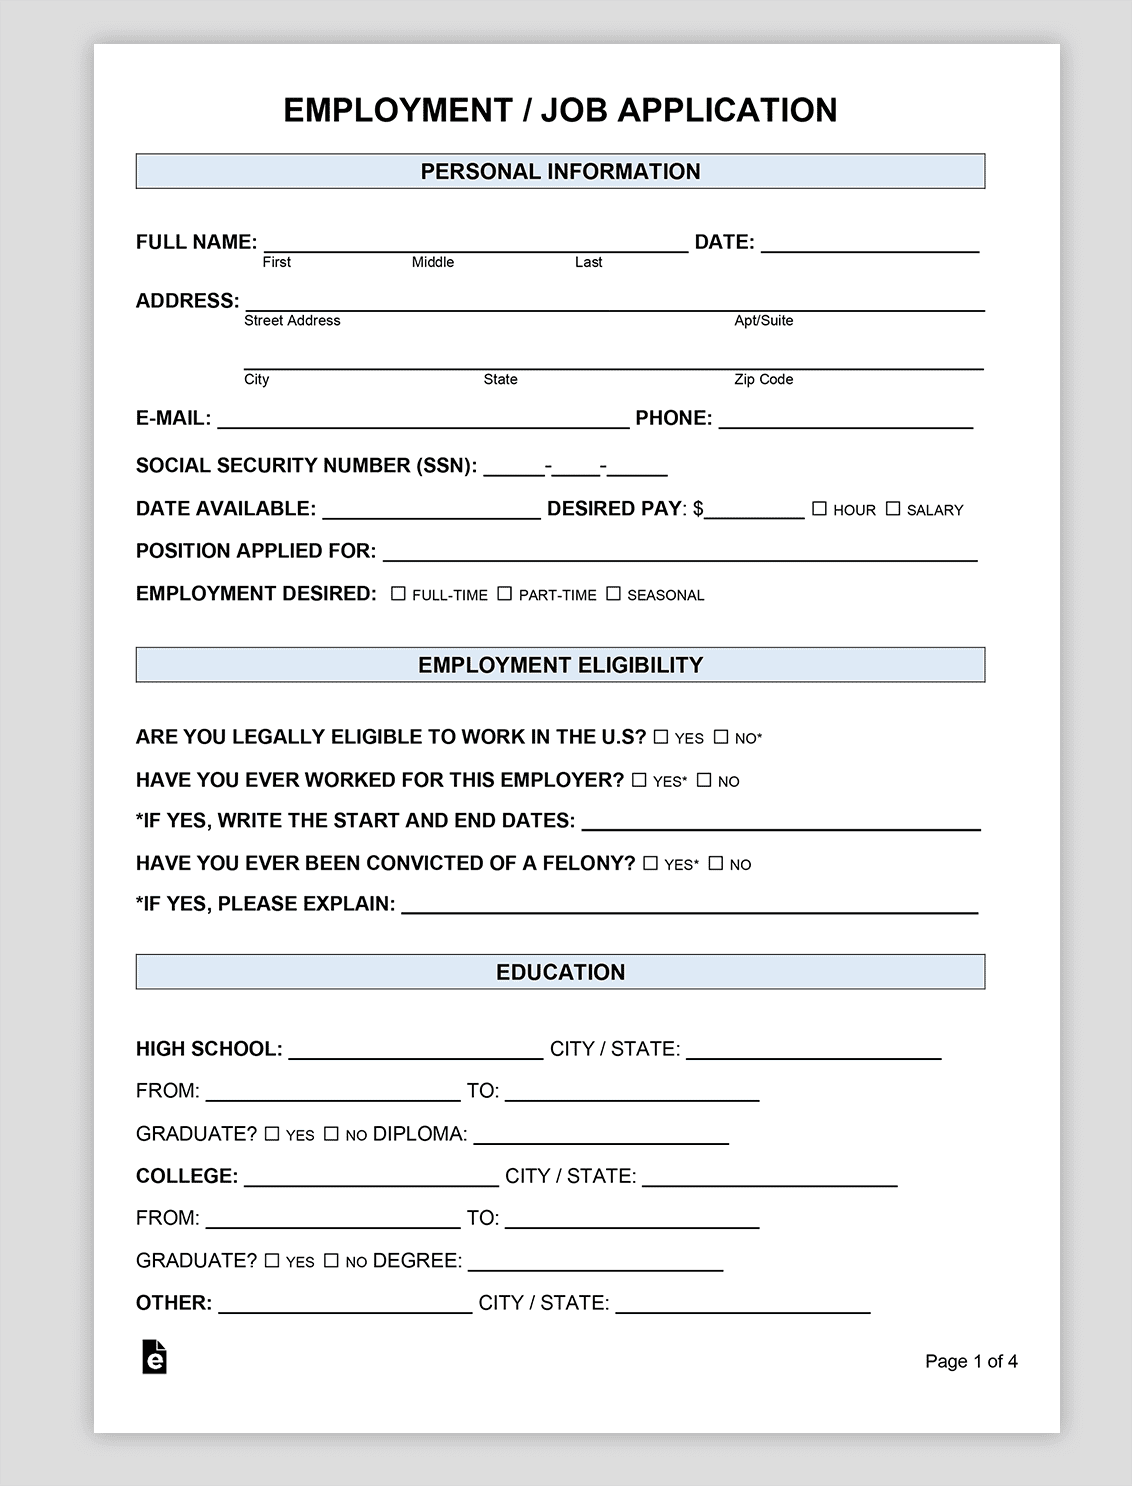 Employment job application form